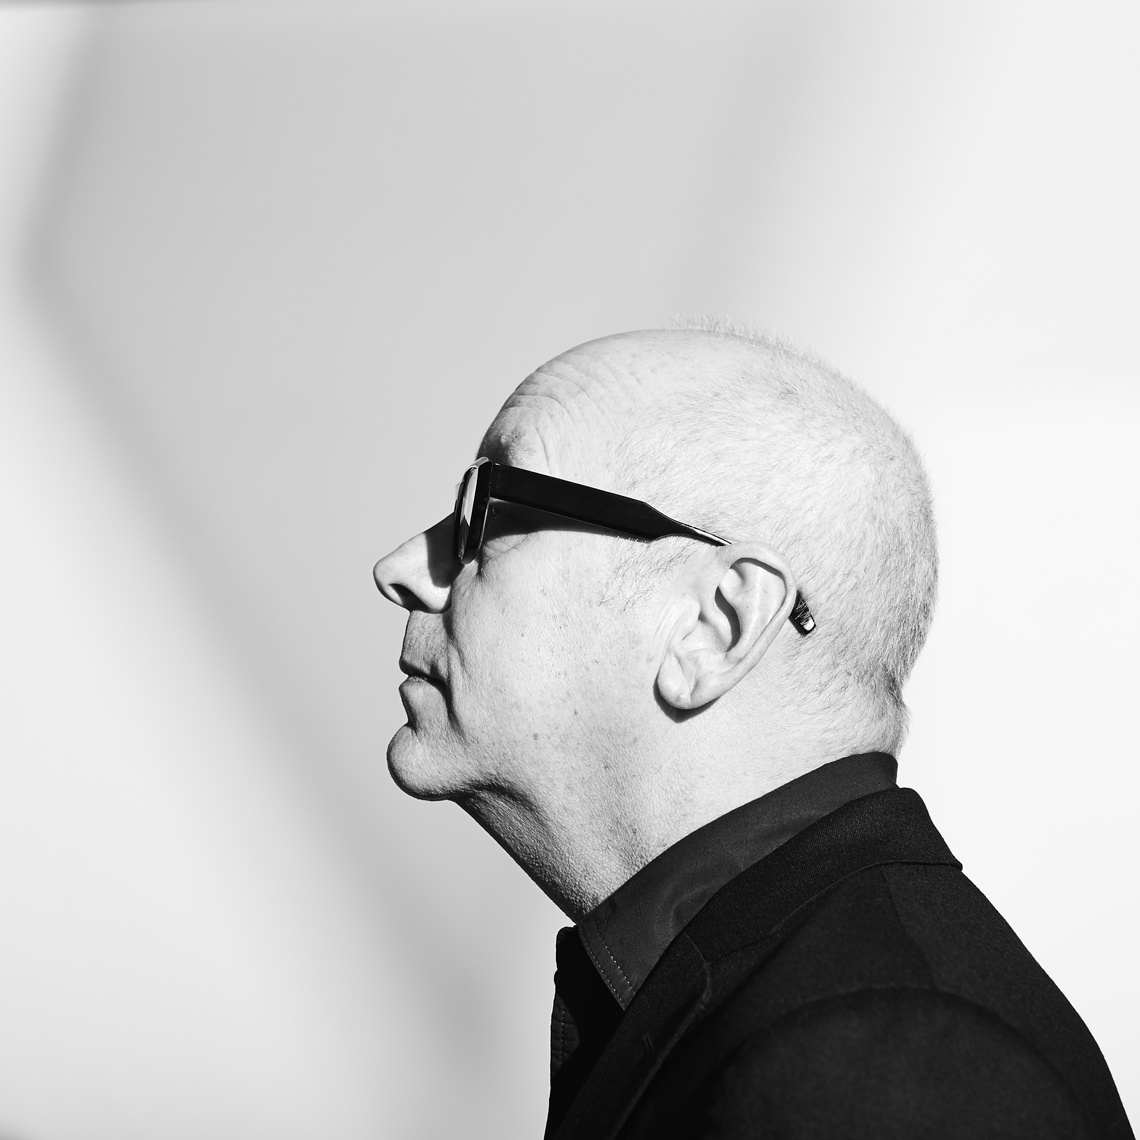 Unique profile portrait of bald man with glasses_black and white